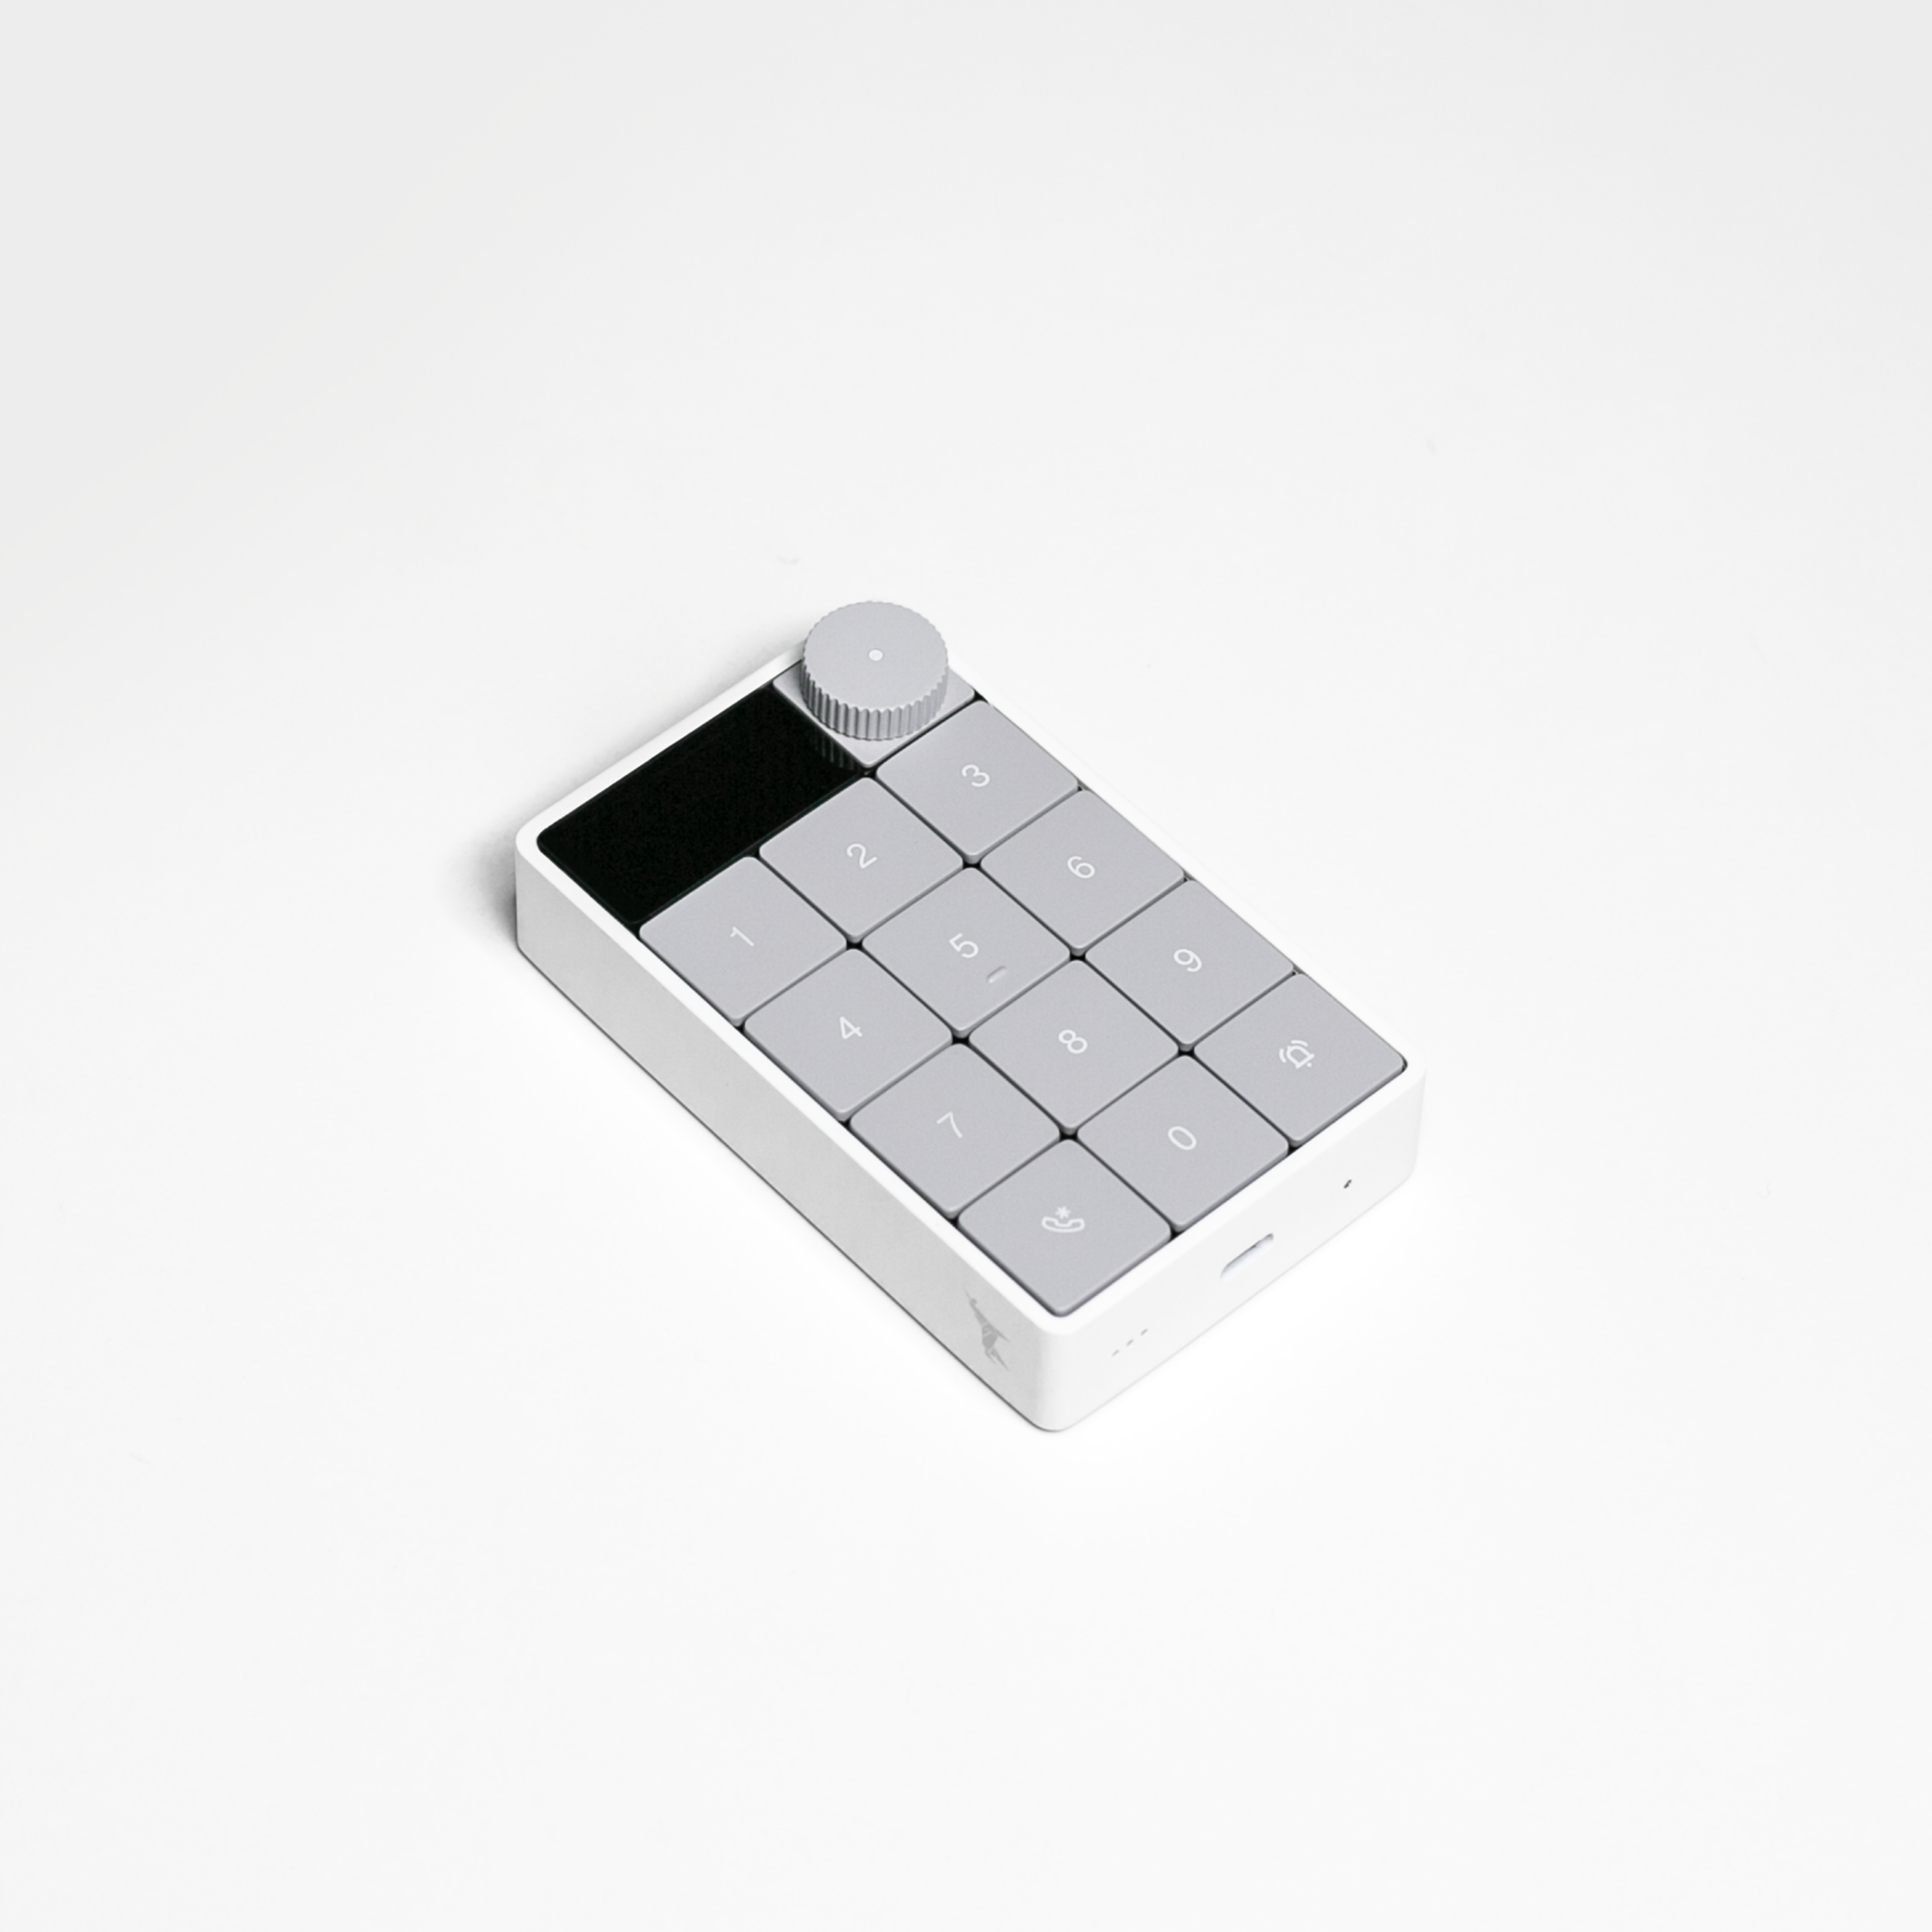 keypad hero basic (square)@2x.png